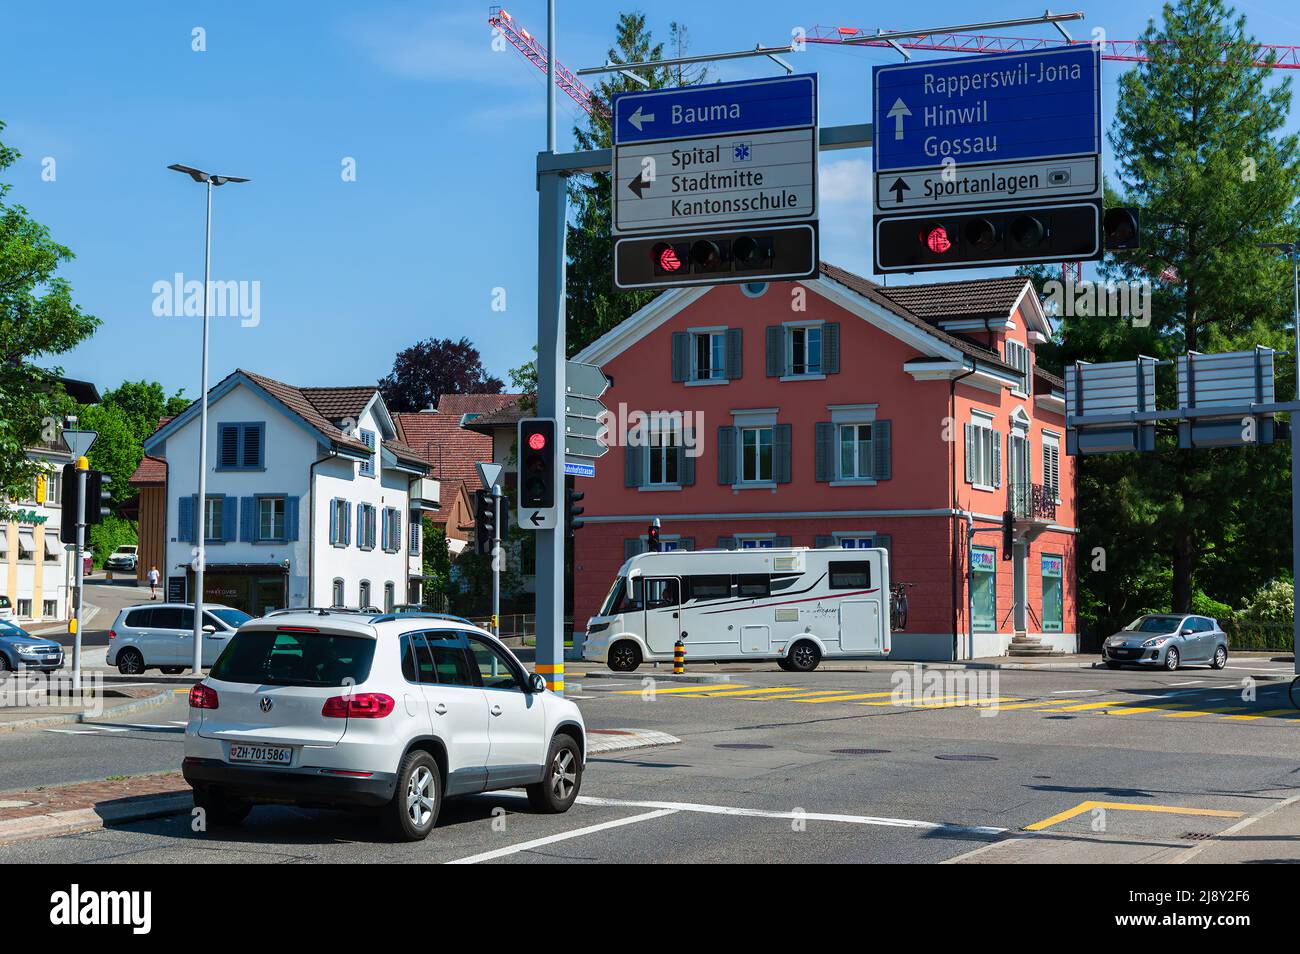 Wetzikon, Switzerland - May 14, 2022: Traffic junction in Wetzikon, Switzerland. Traffic directions for Bauma, Rapperswil, Hinwil, Gossau ... Stock Photo